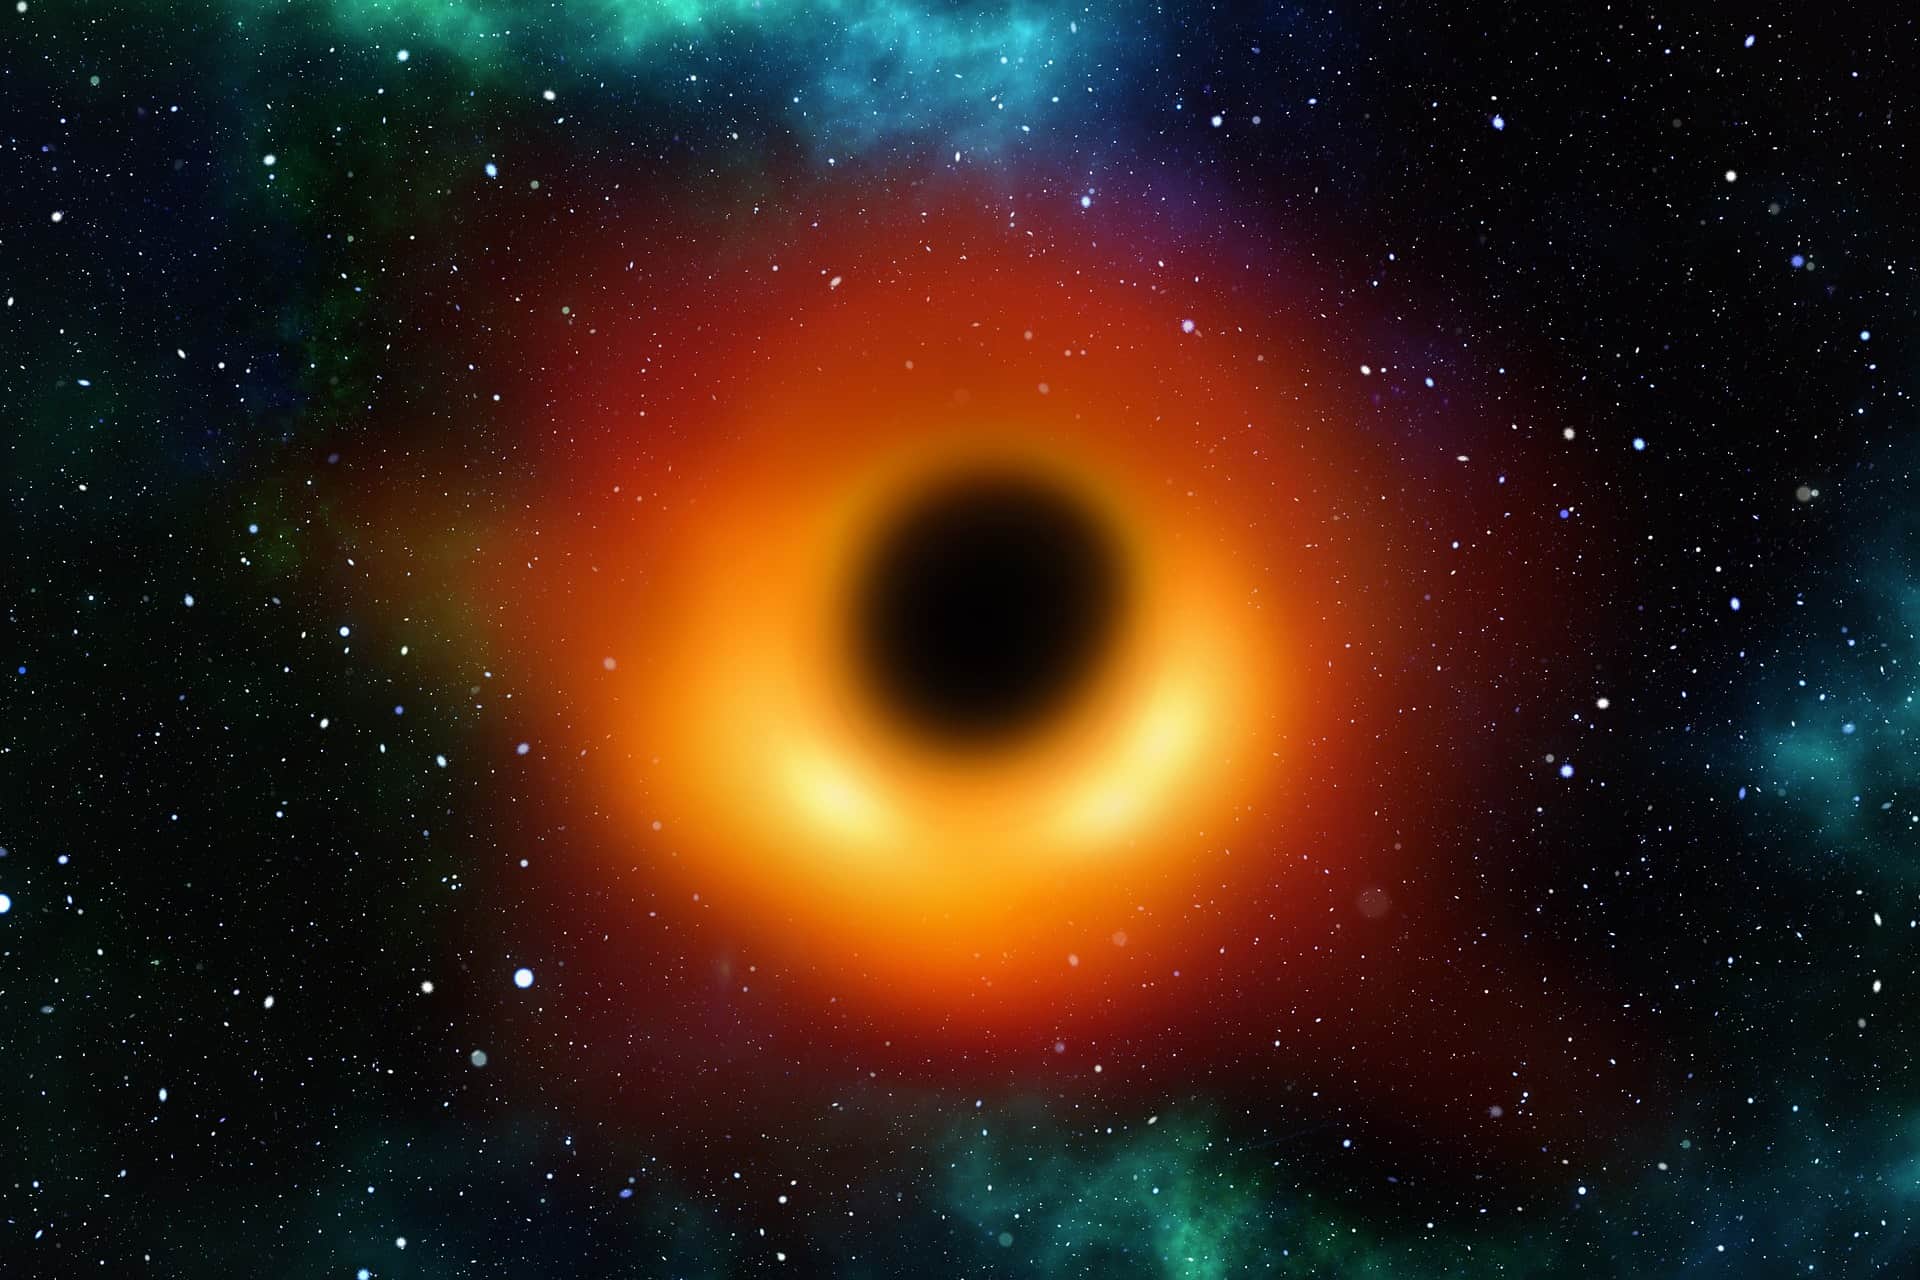 stuff about black holes